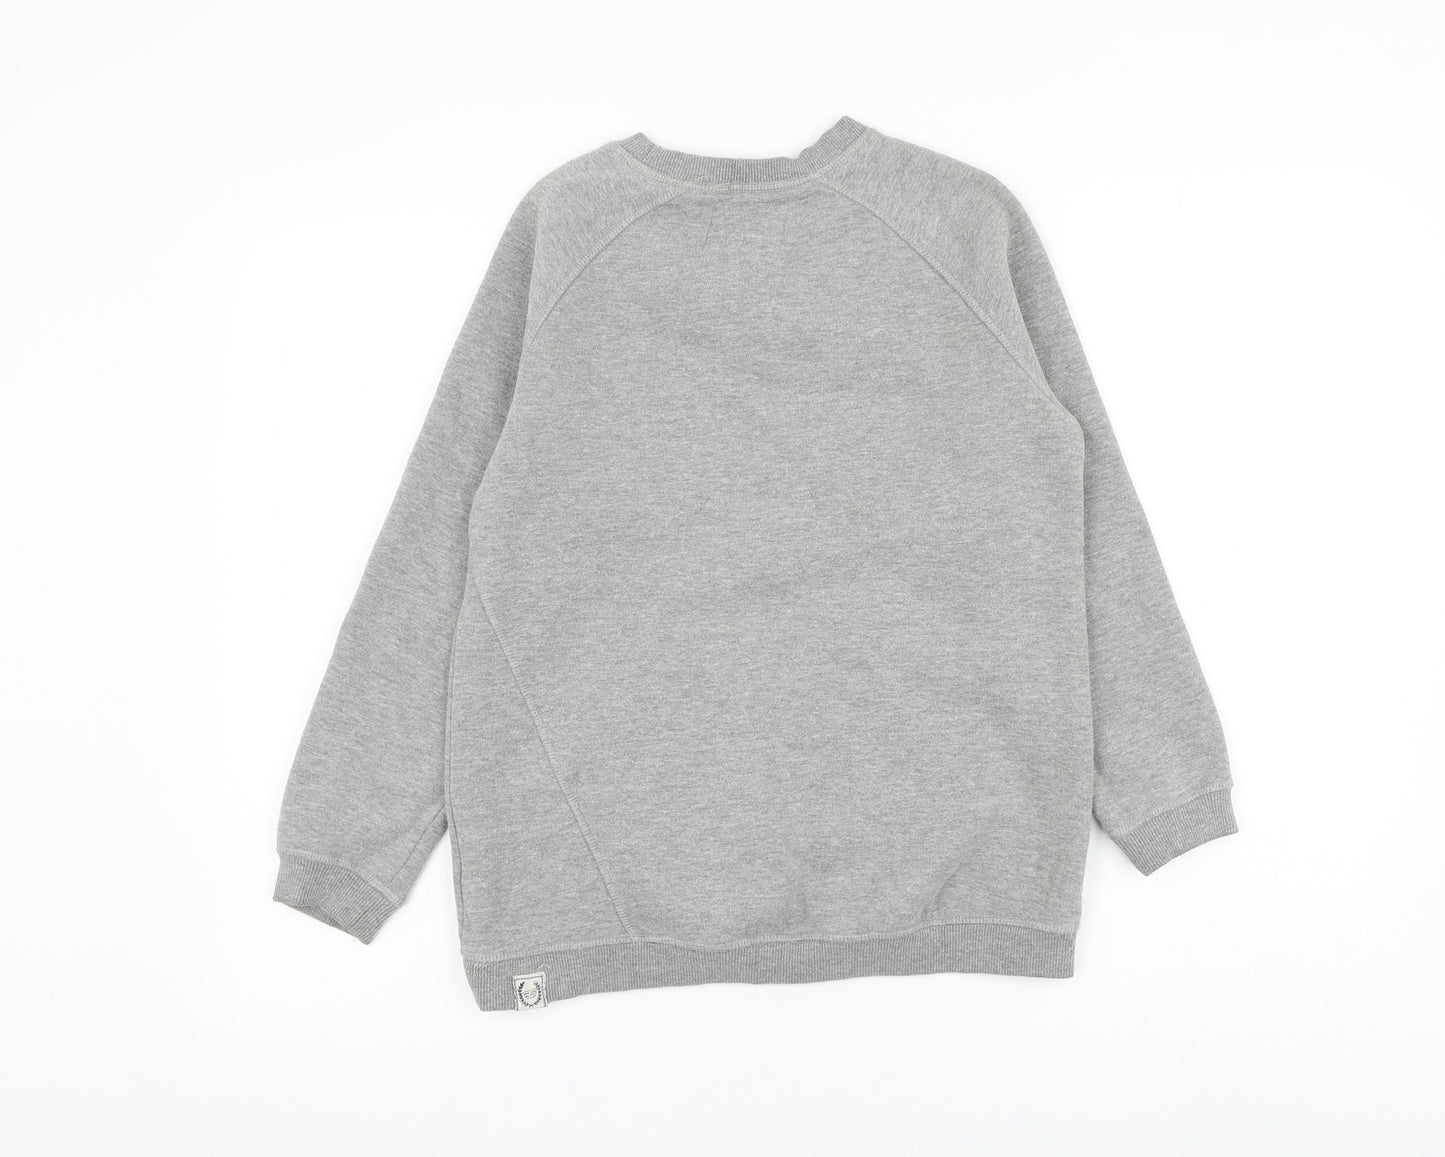 Golddigga Girls Grey Cotton Pullover Sweatshirt Size 13 Years Pullover